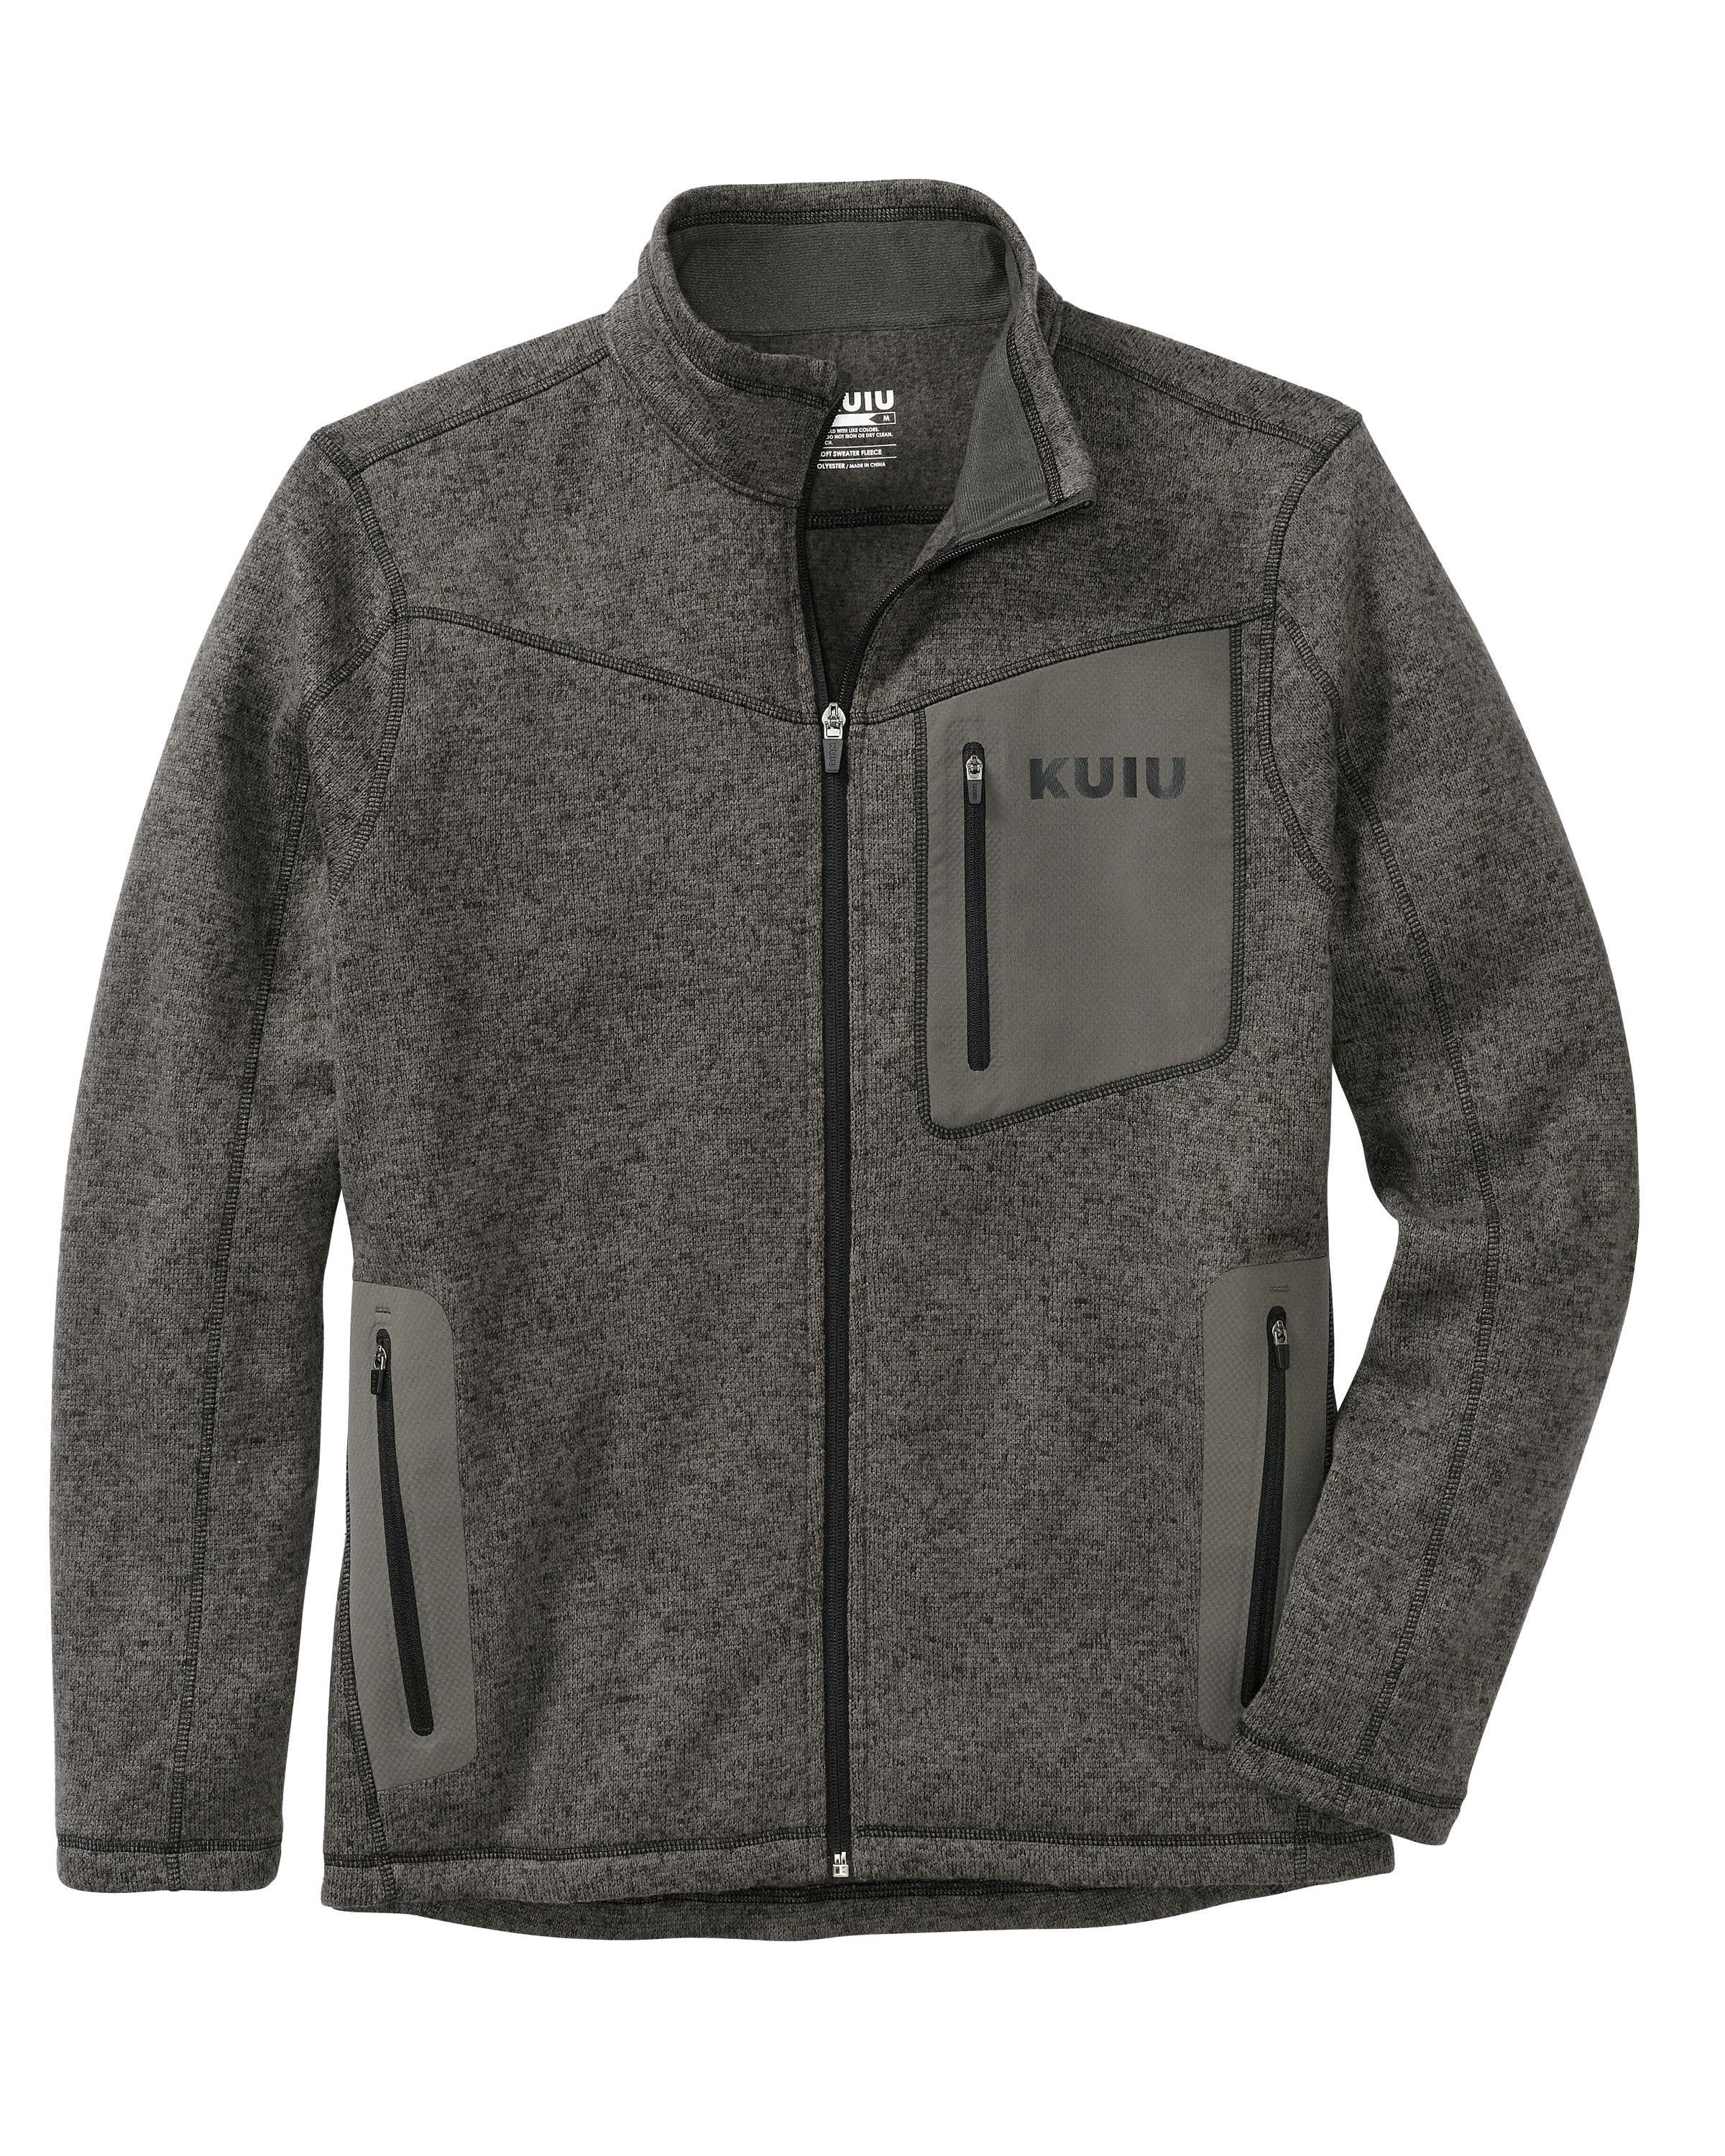 KUIU Base Camp Full Zip Sweater in Charcoal | Large